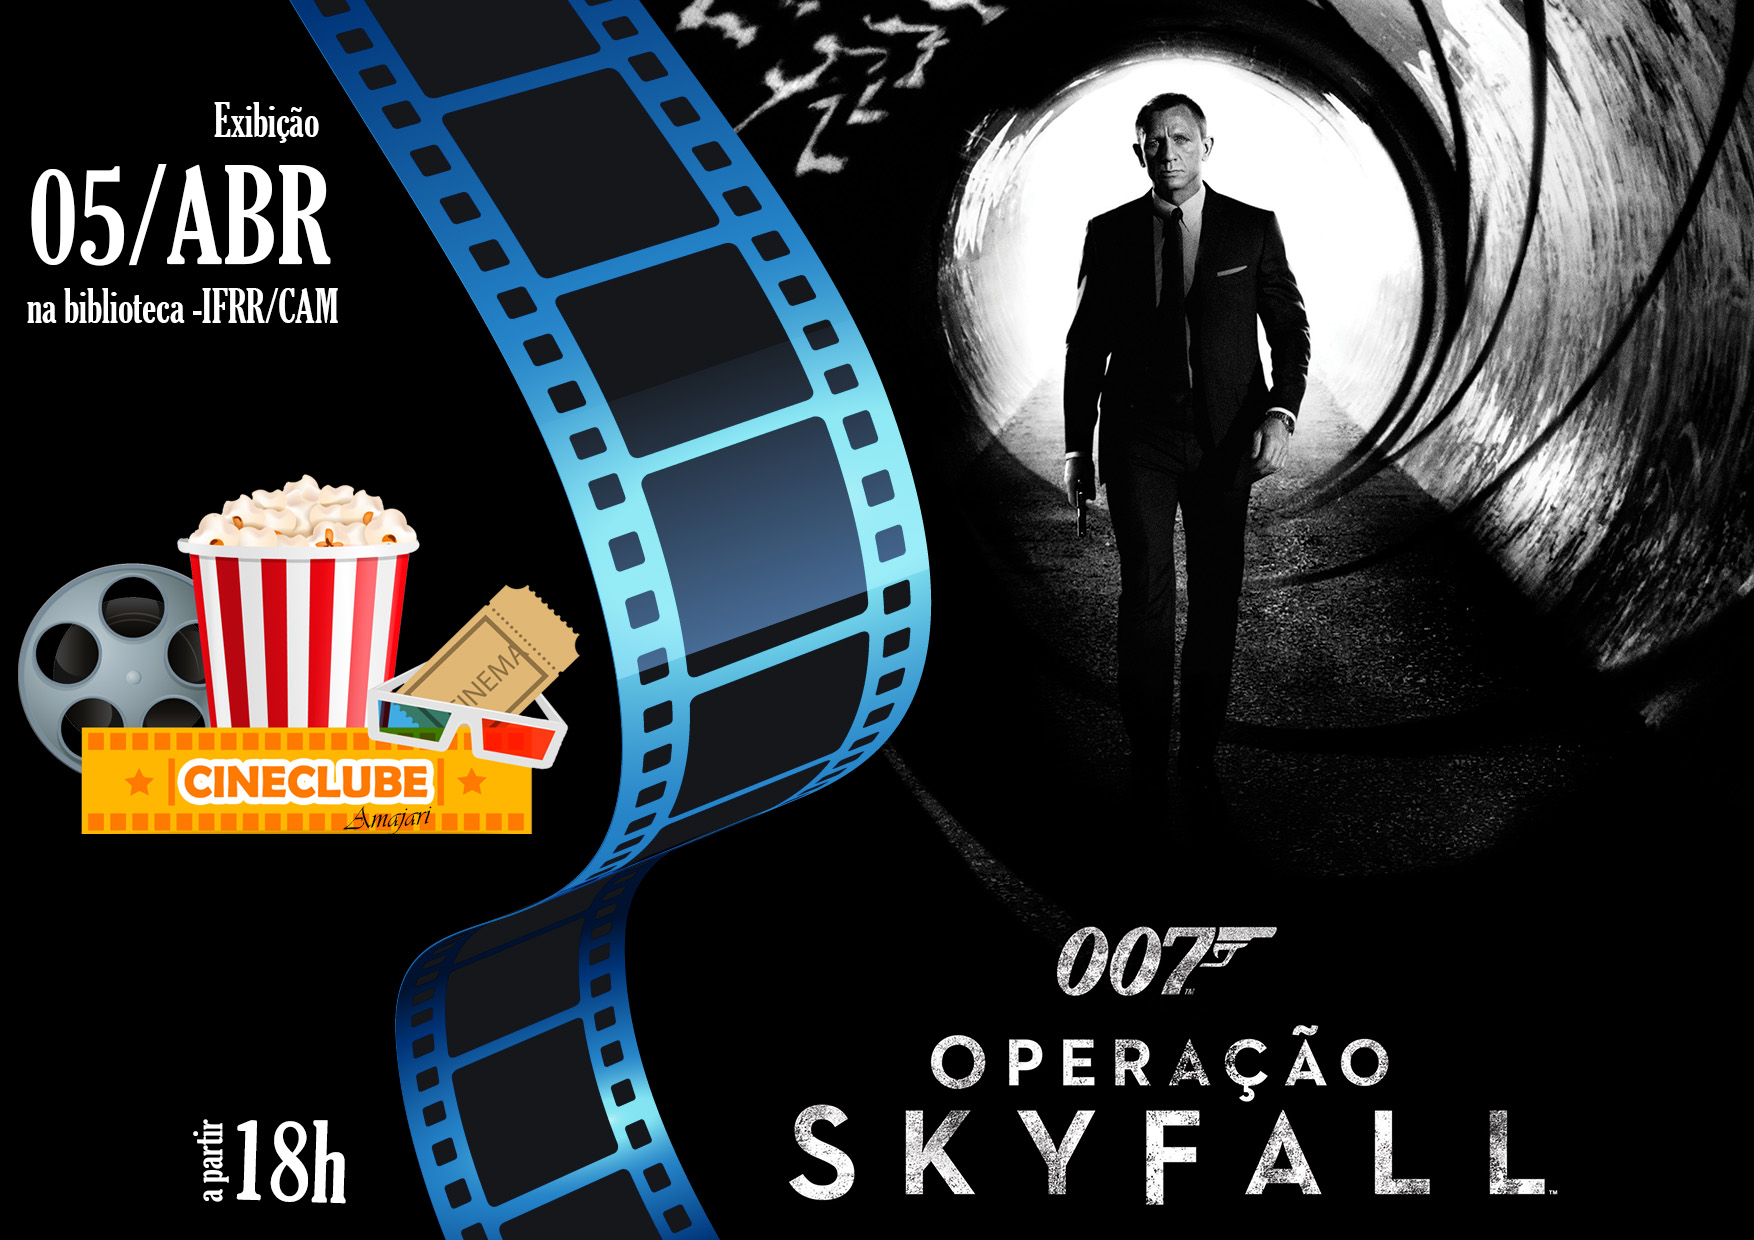 007 será exibido nesta terça-feira pelo Cineclube